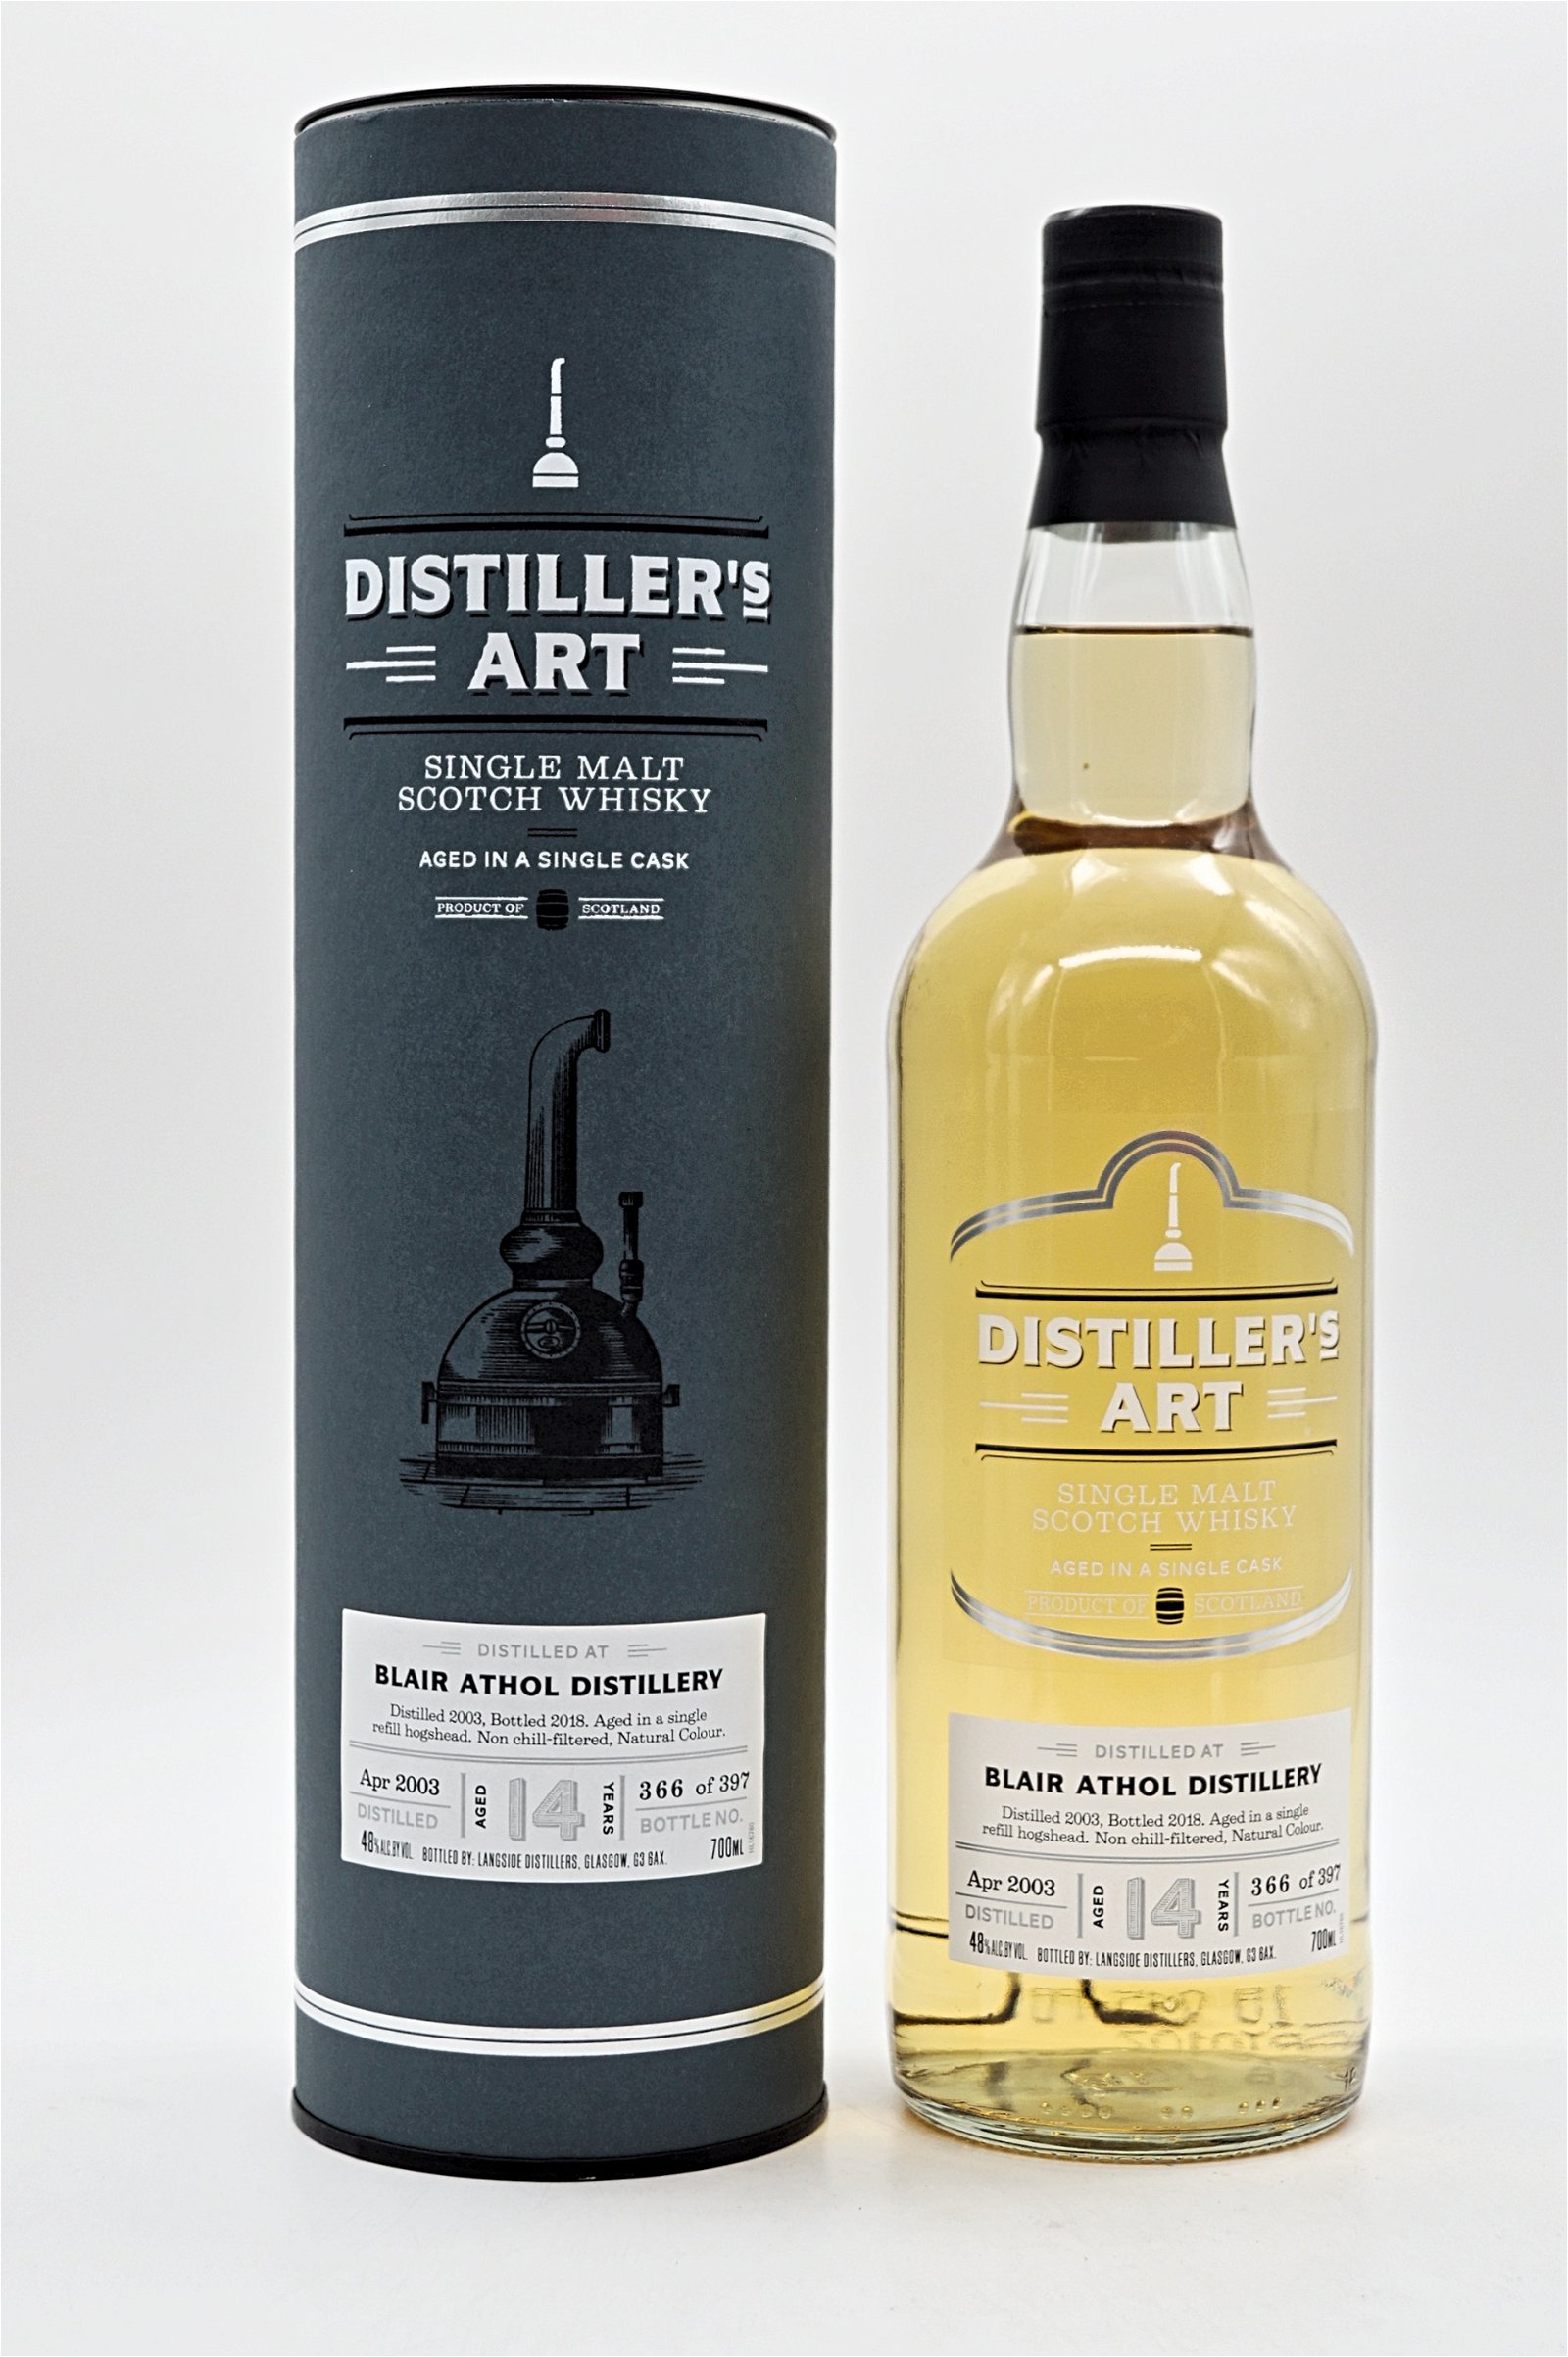 Distillers Art Blair Athol Distillery 14 Jahre 48% 397 Fl. Single Cask Single Malt Scotch Whisky